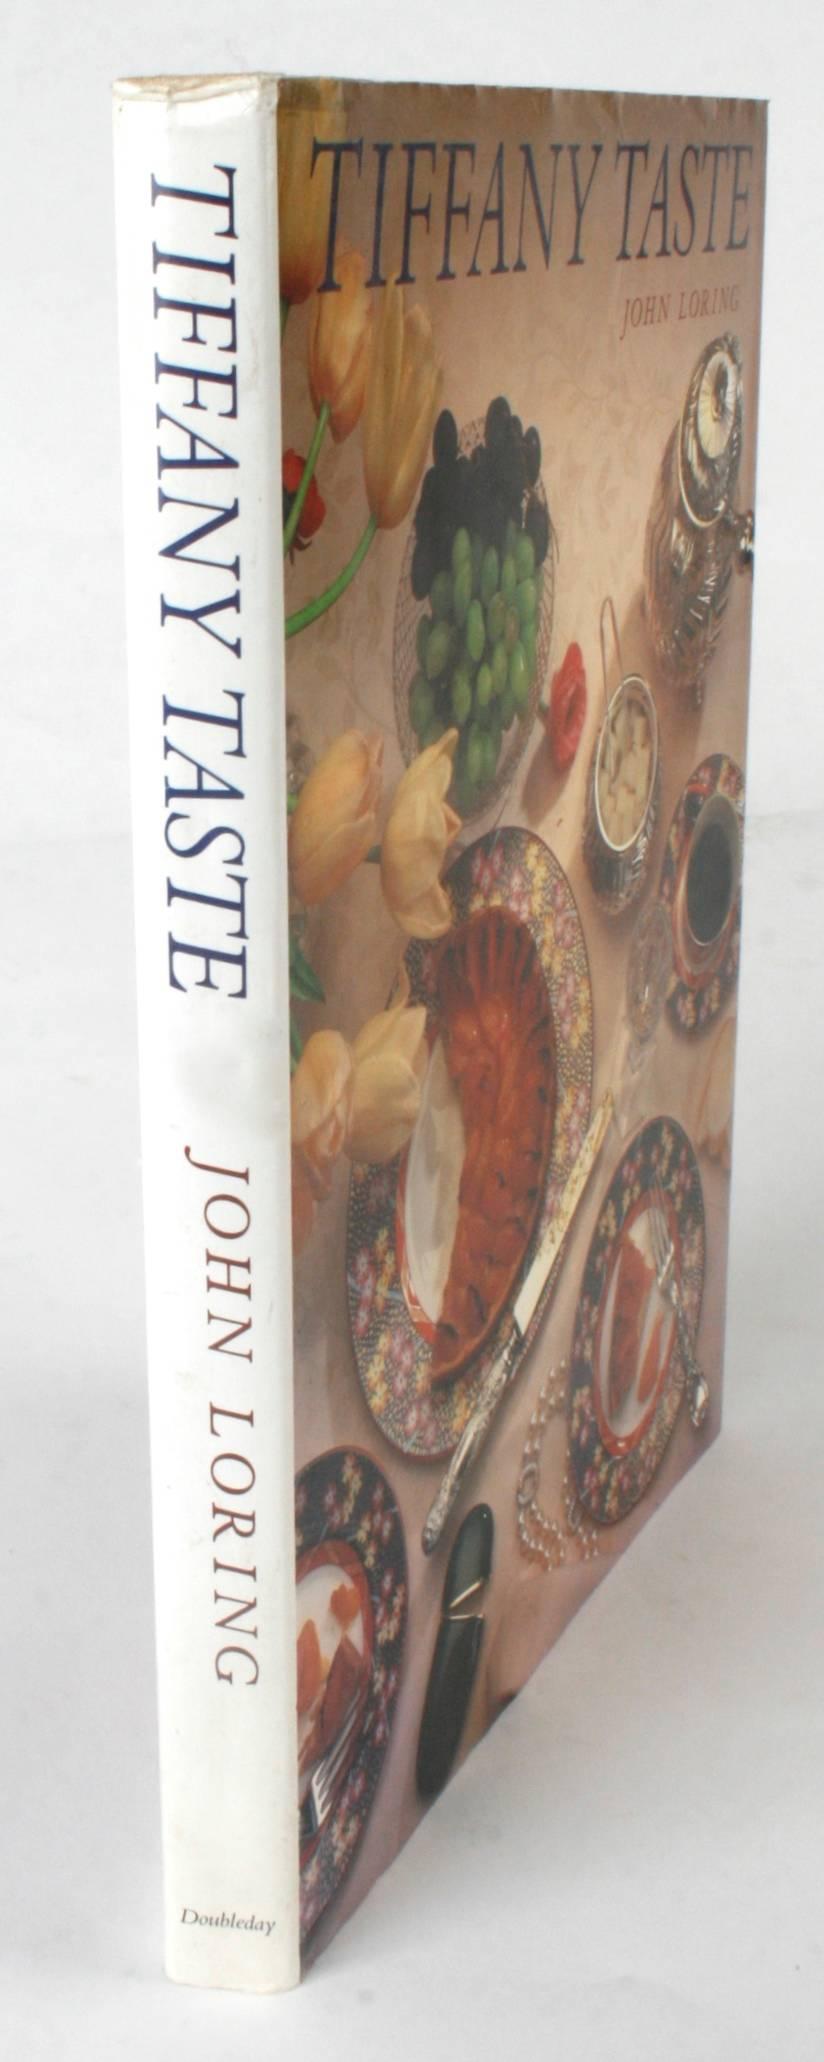 Tiffany Taste by John Loring, First Edition 13